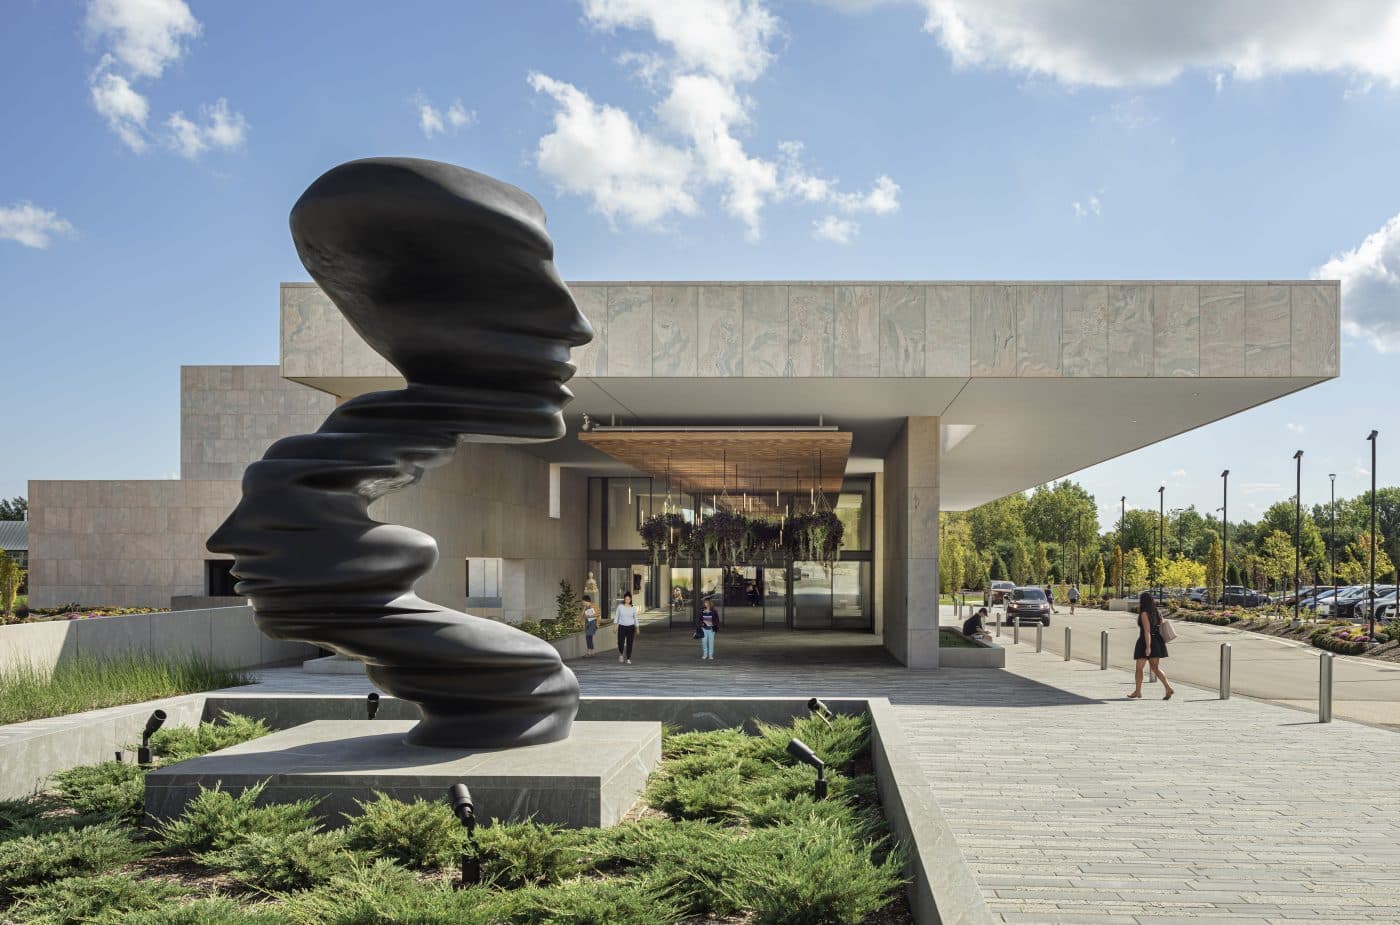 Frederik Meijier Gardens and Sculpture Park Grand Rapids, Michigan Welcome Center Tod Williams Billie Tsien Architects Tony Cragg Bent of Mind